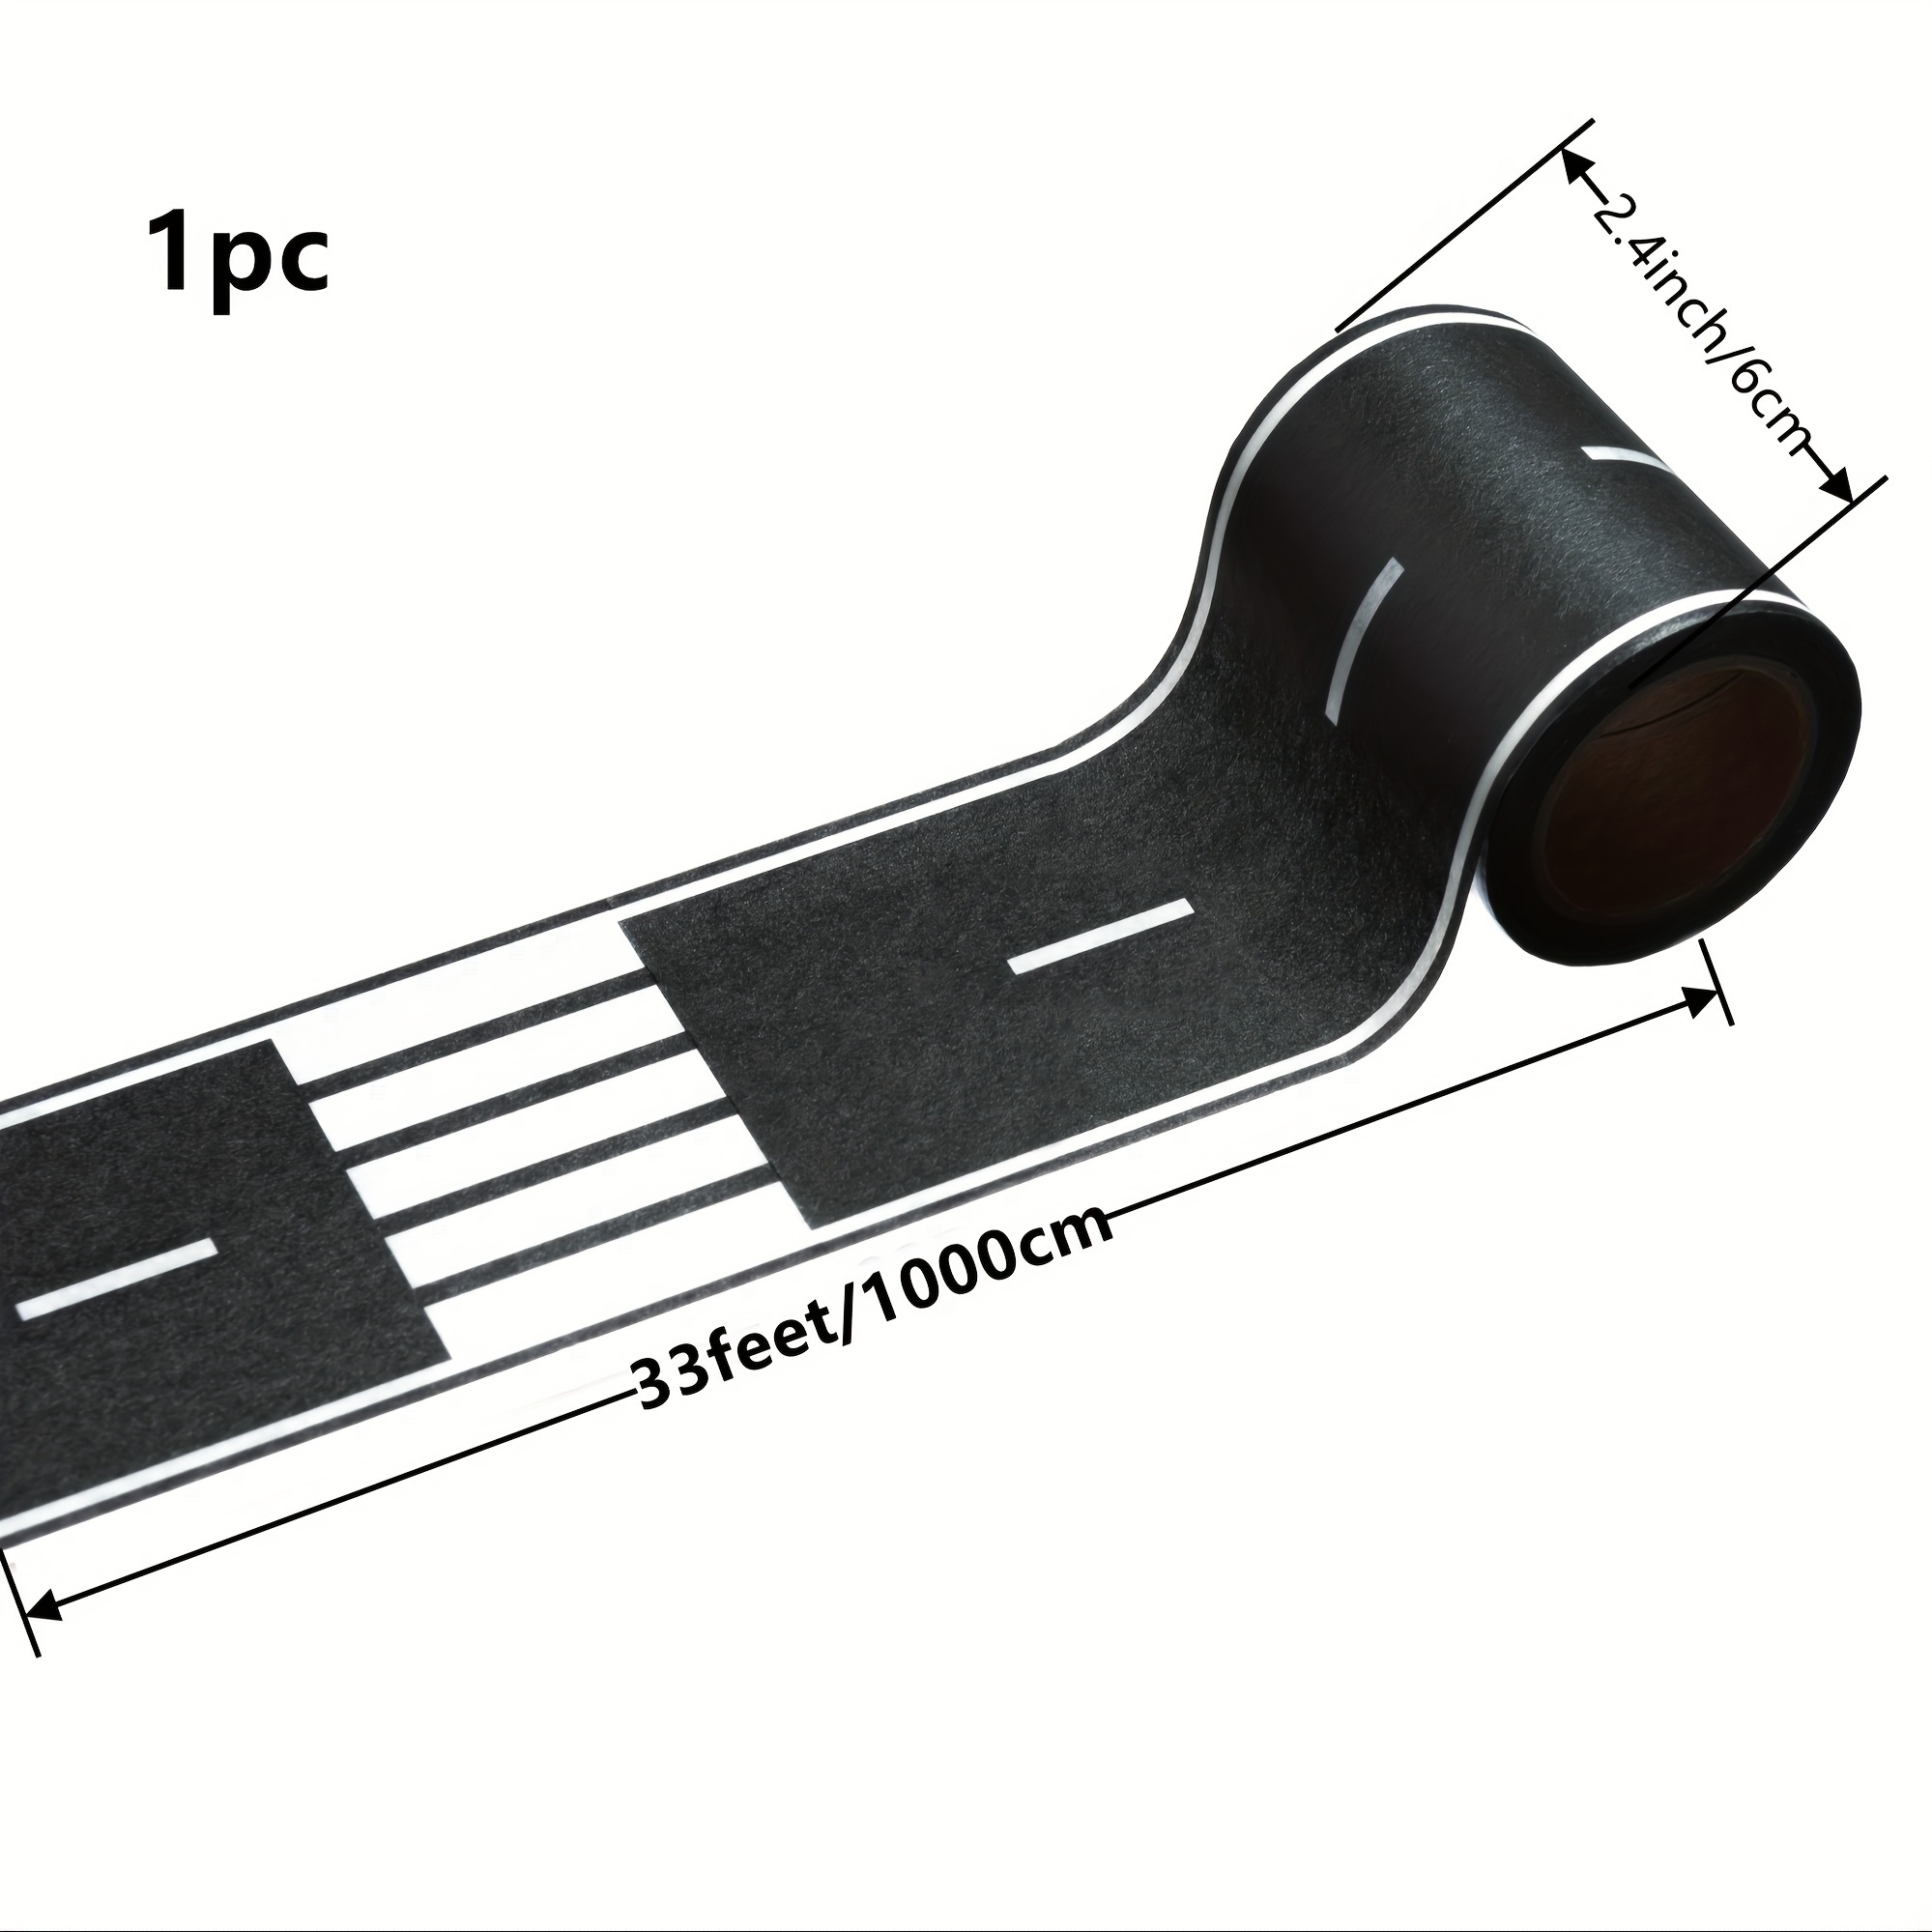 PlayTape Black Road-Black Road Tape Includes Street Curves Tape